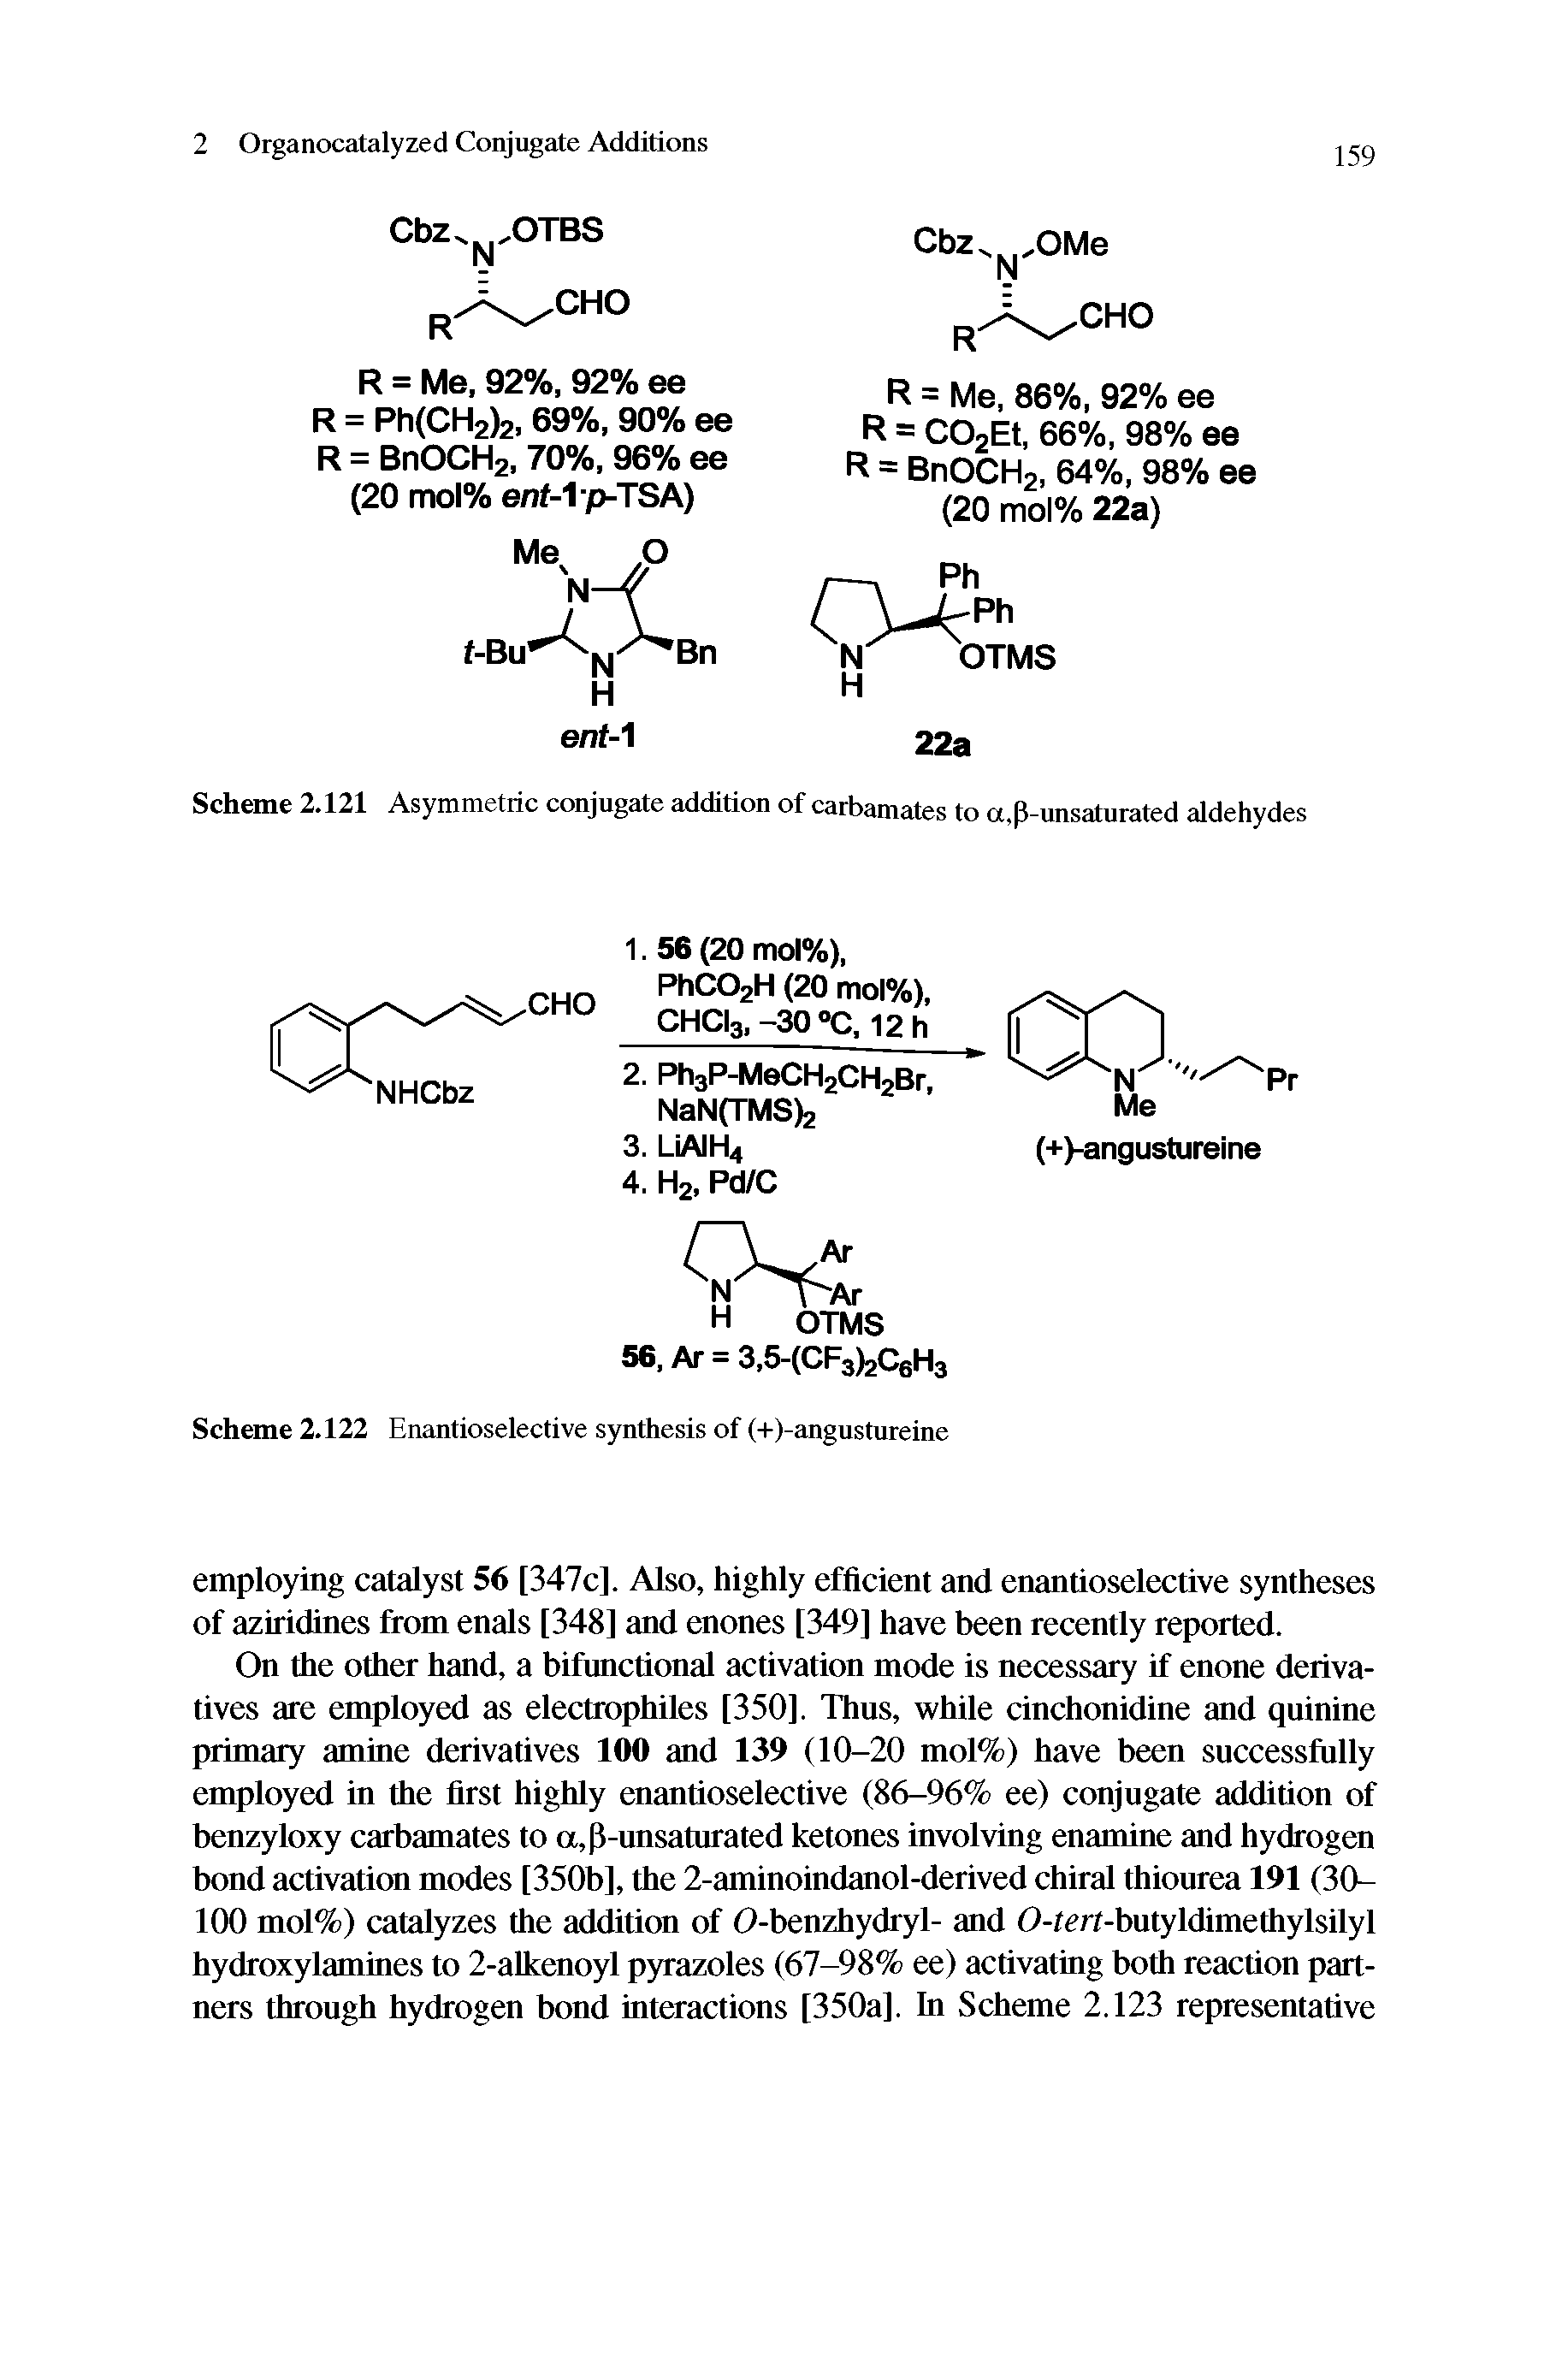 Scheme 2.121 Asymmetric conjugate addition of carbamates to a.p-unsatuiated aldehydes...